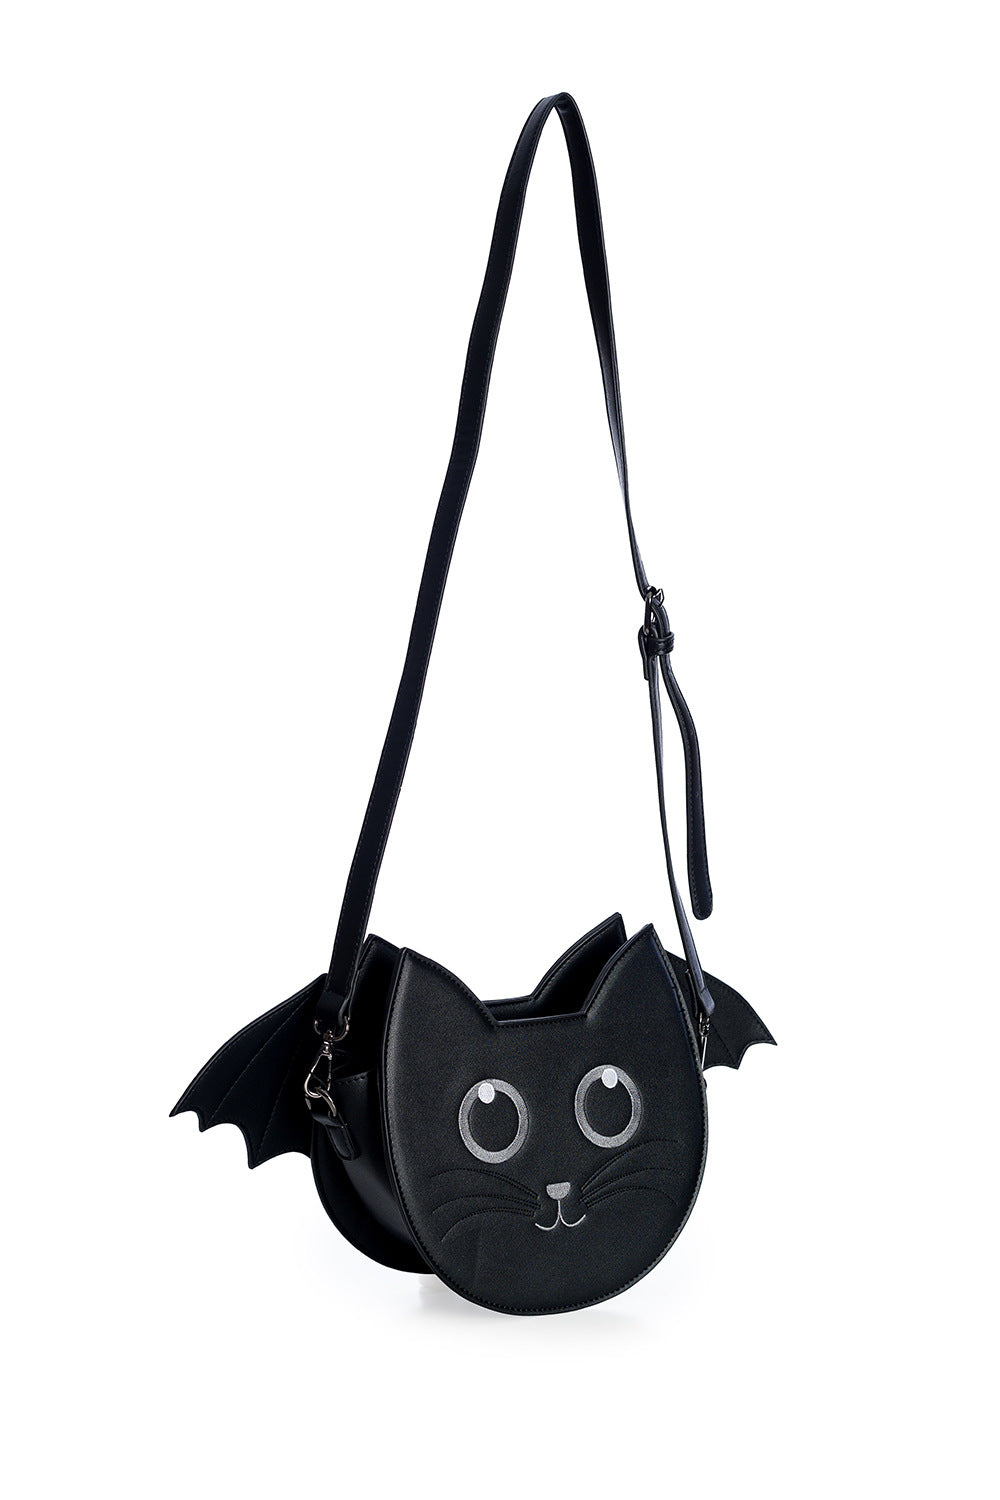 Lost Queen Dark Victorian Purse, Gothic Cat Print Shoulder Bag